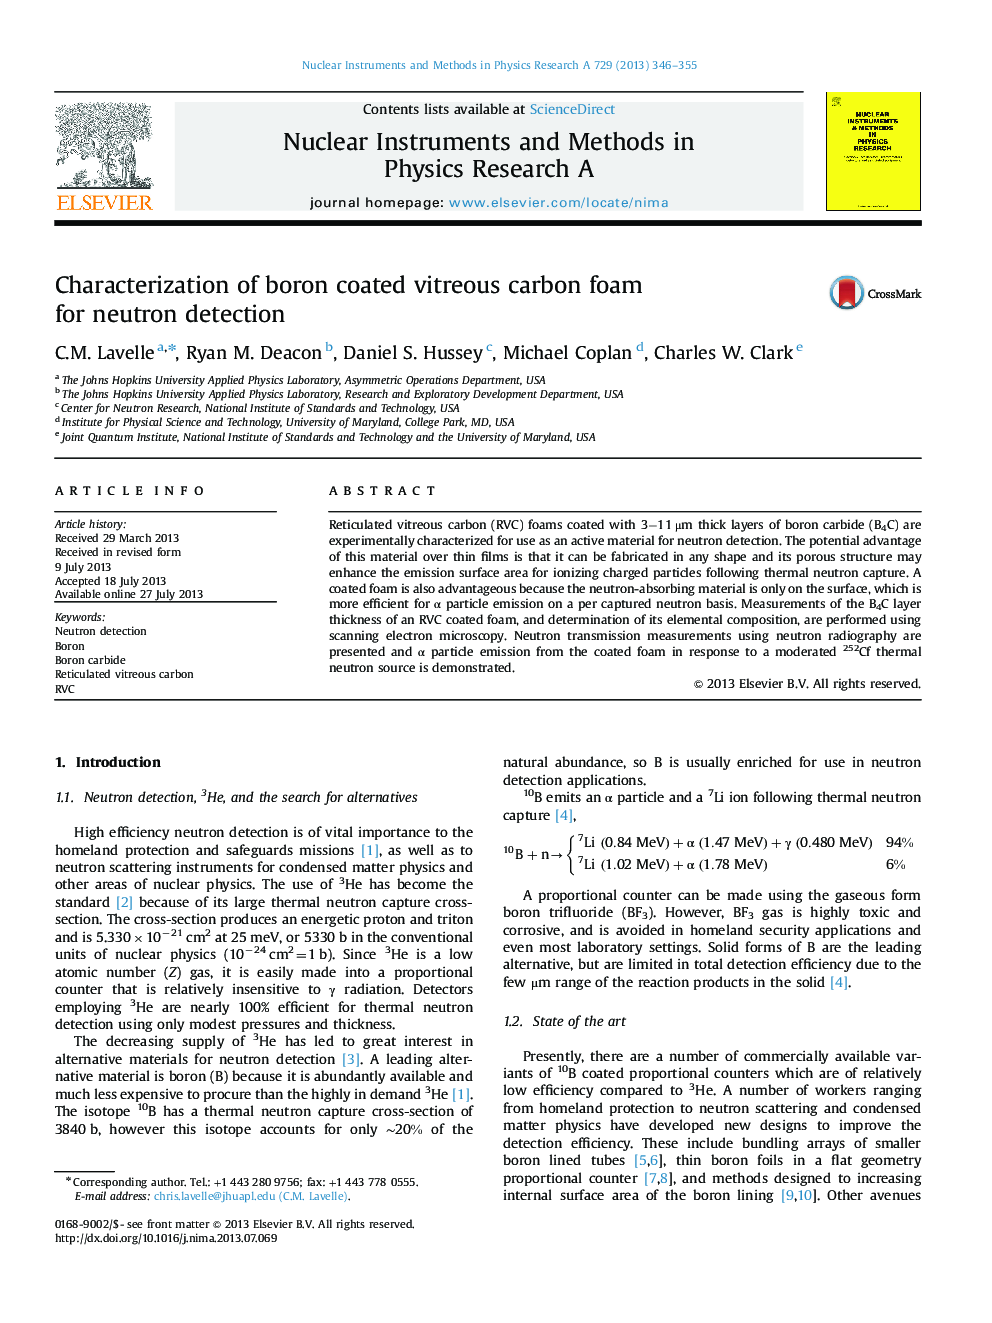 Characterization of boron coated vitreous carbon foam for neutron detection